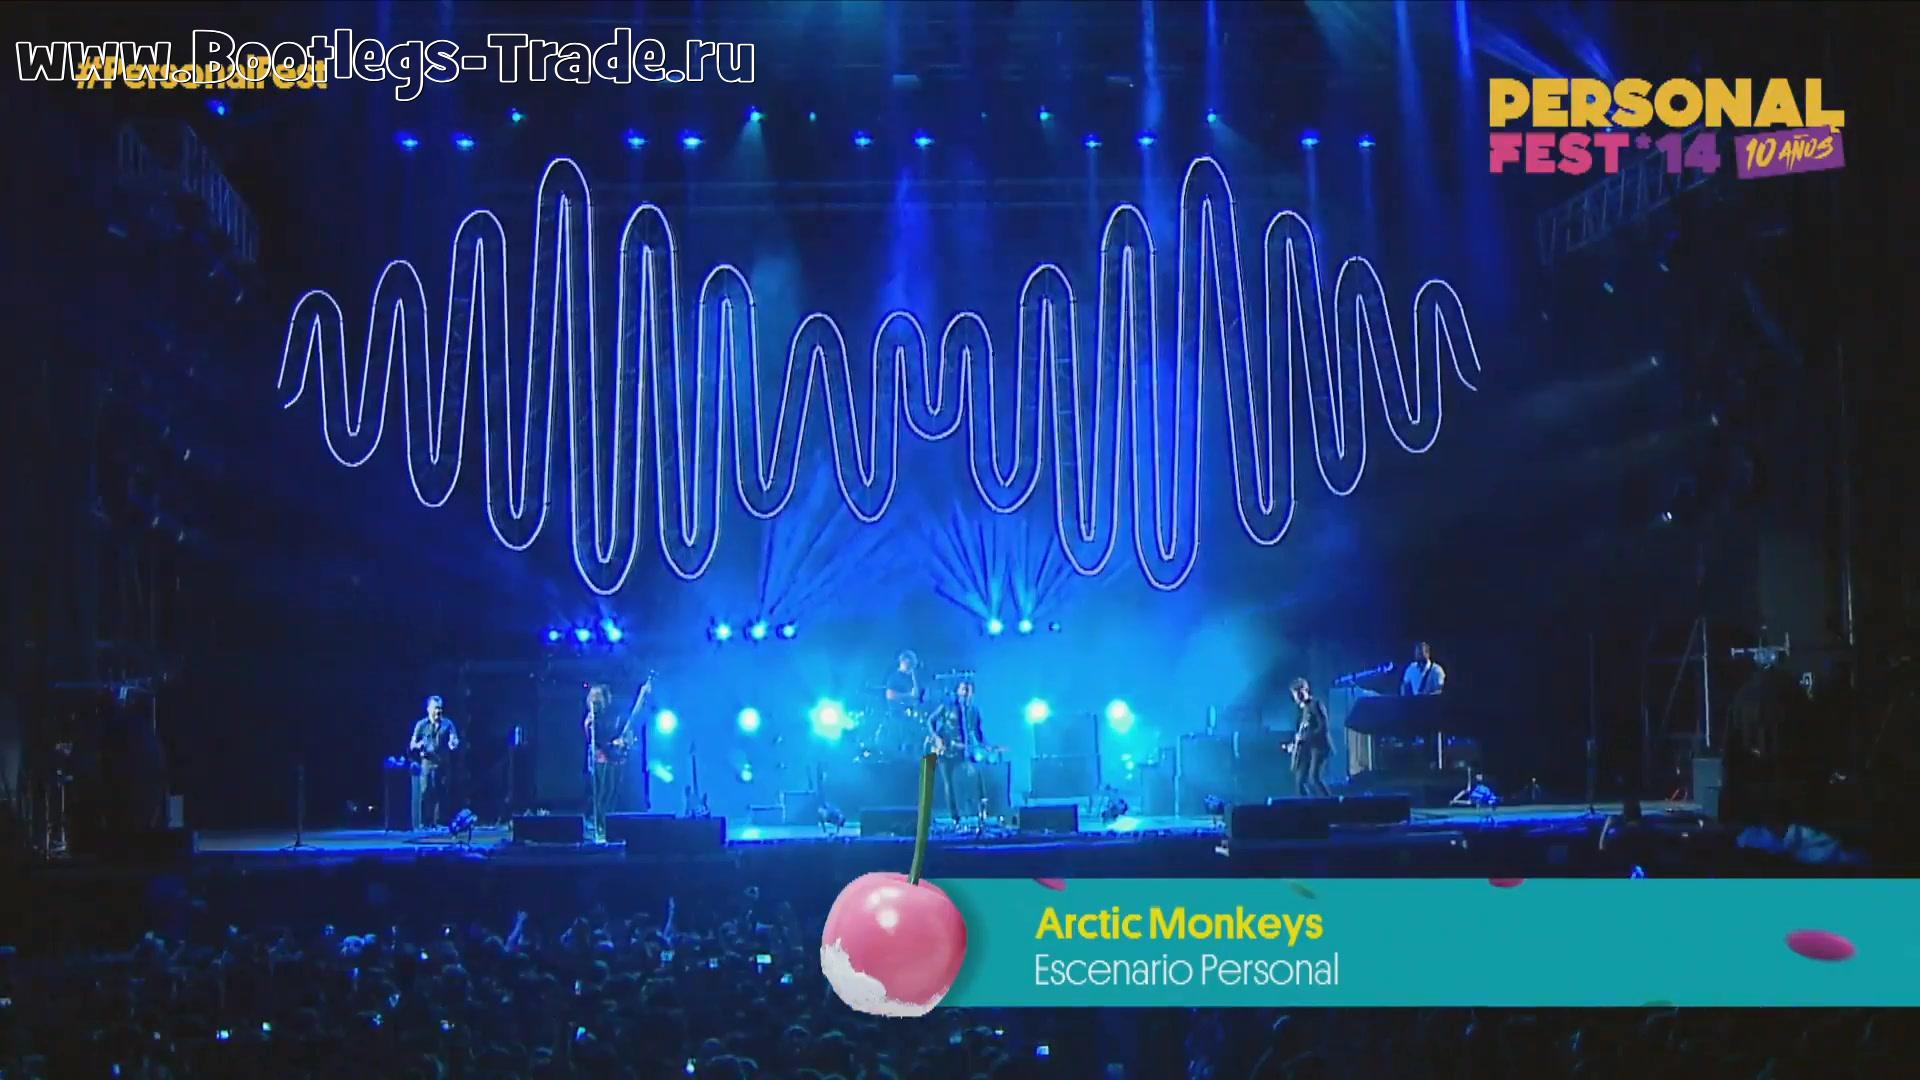 Arctic Monkeys 2014-11-08 Personal Fest 2014, Club GEBA - Sede San Martin, Buenos Aires, Argentina (Webcast HD 1080)